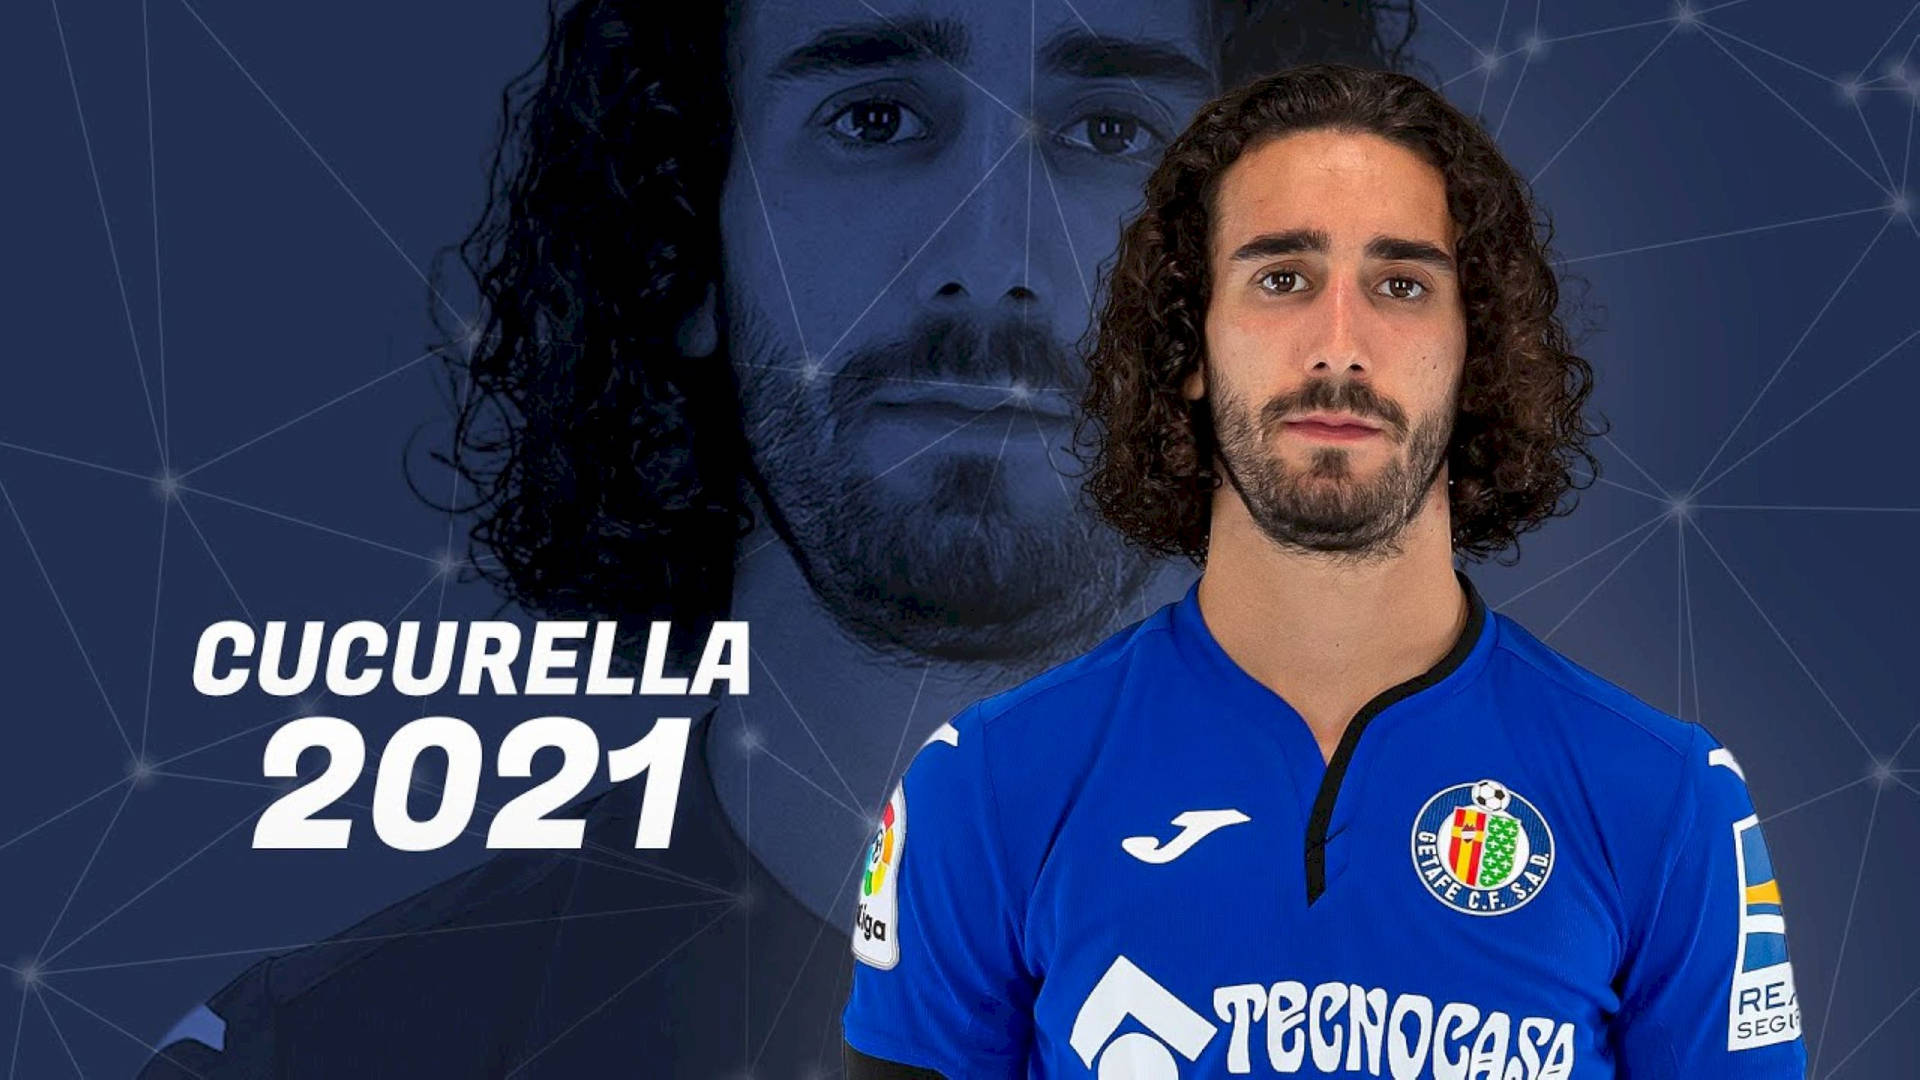 Marccucurella 2021 Chelsea - Marc Cucurella 2021 Chelsea Sfondo